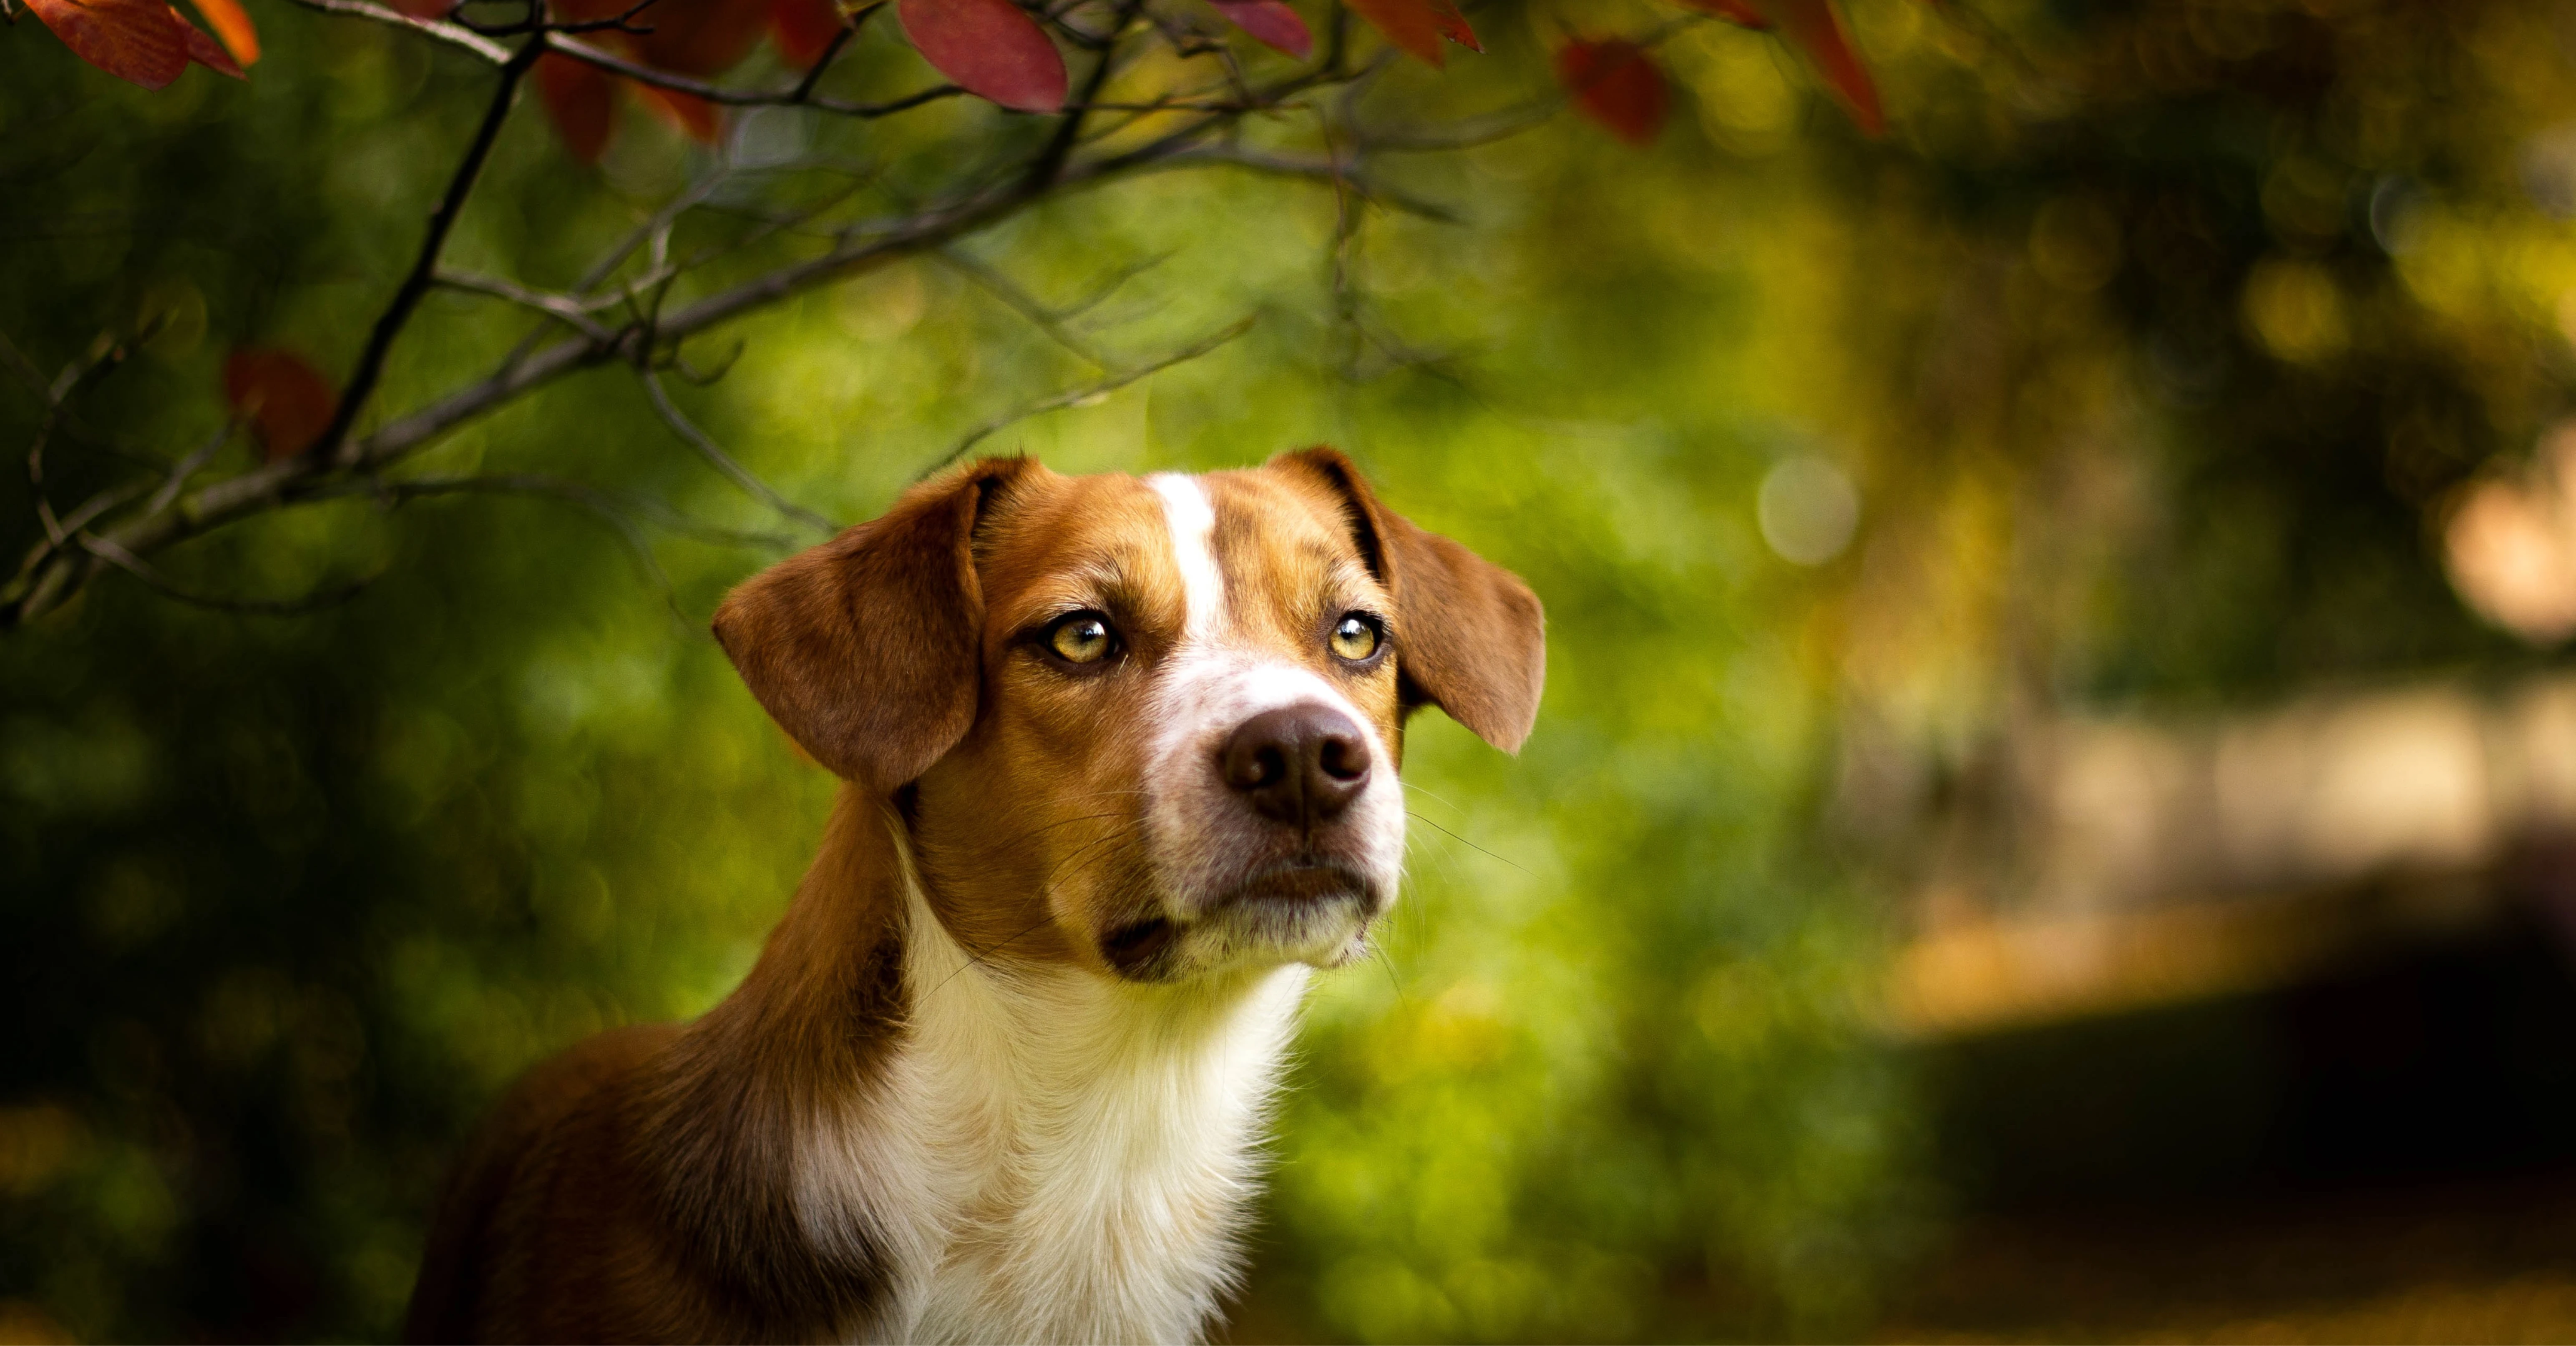 Beagle Photo on Unsplash